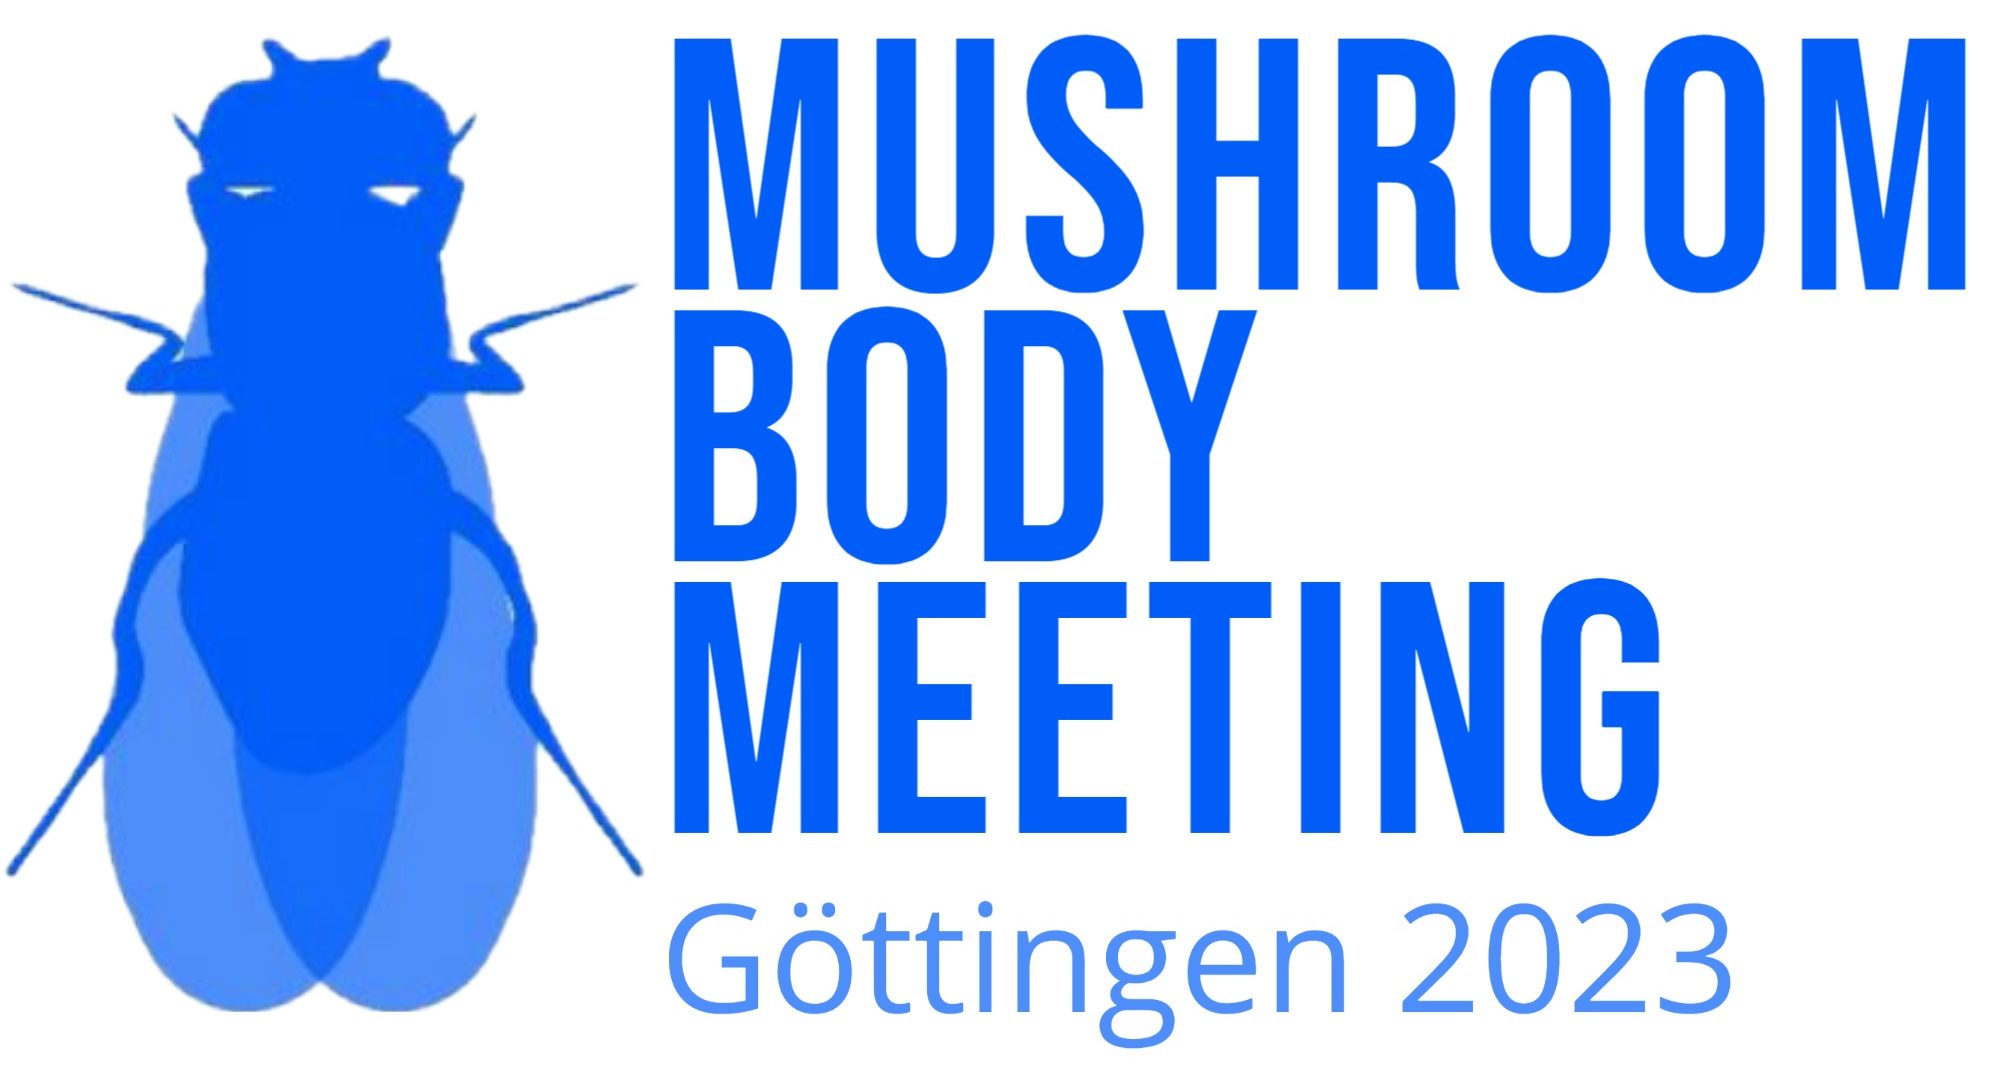 Mushroom Body Meeting 2023